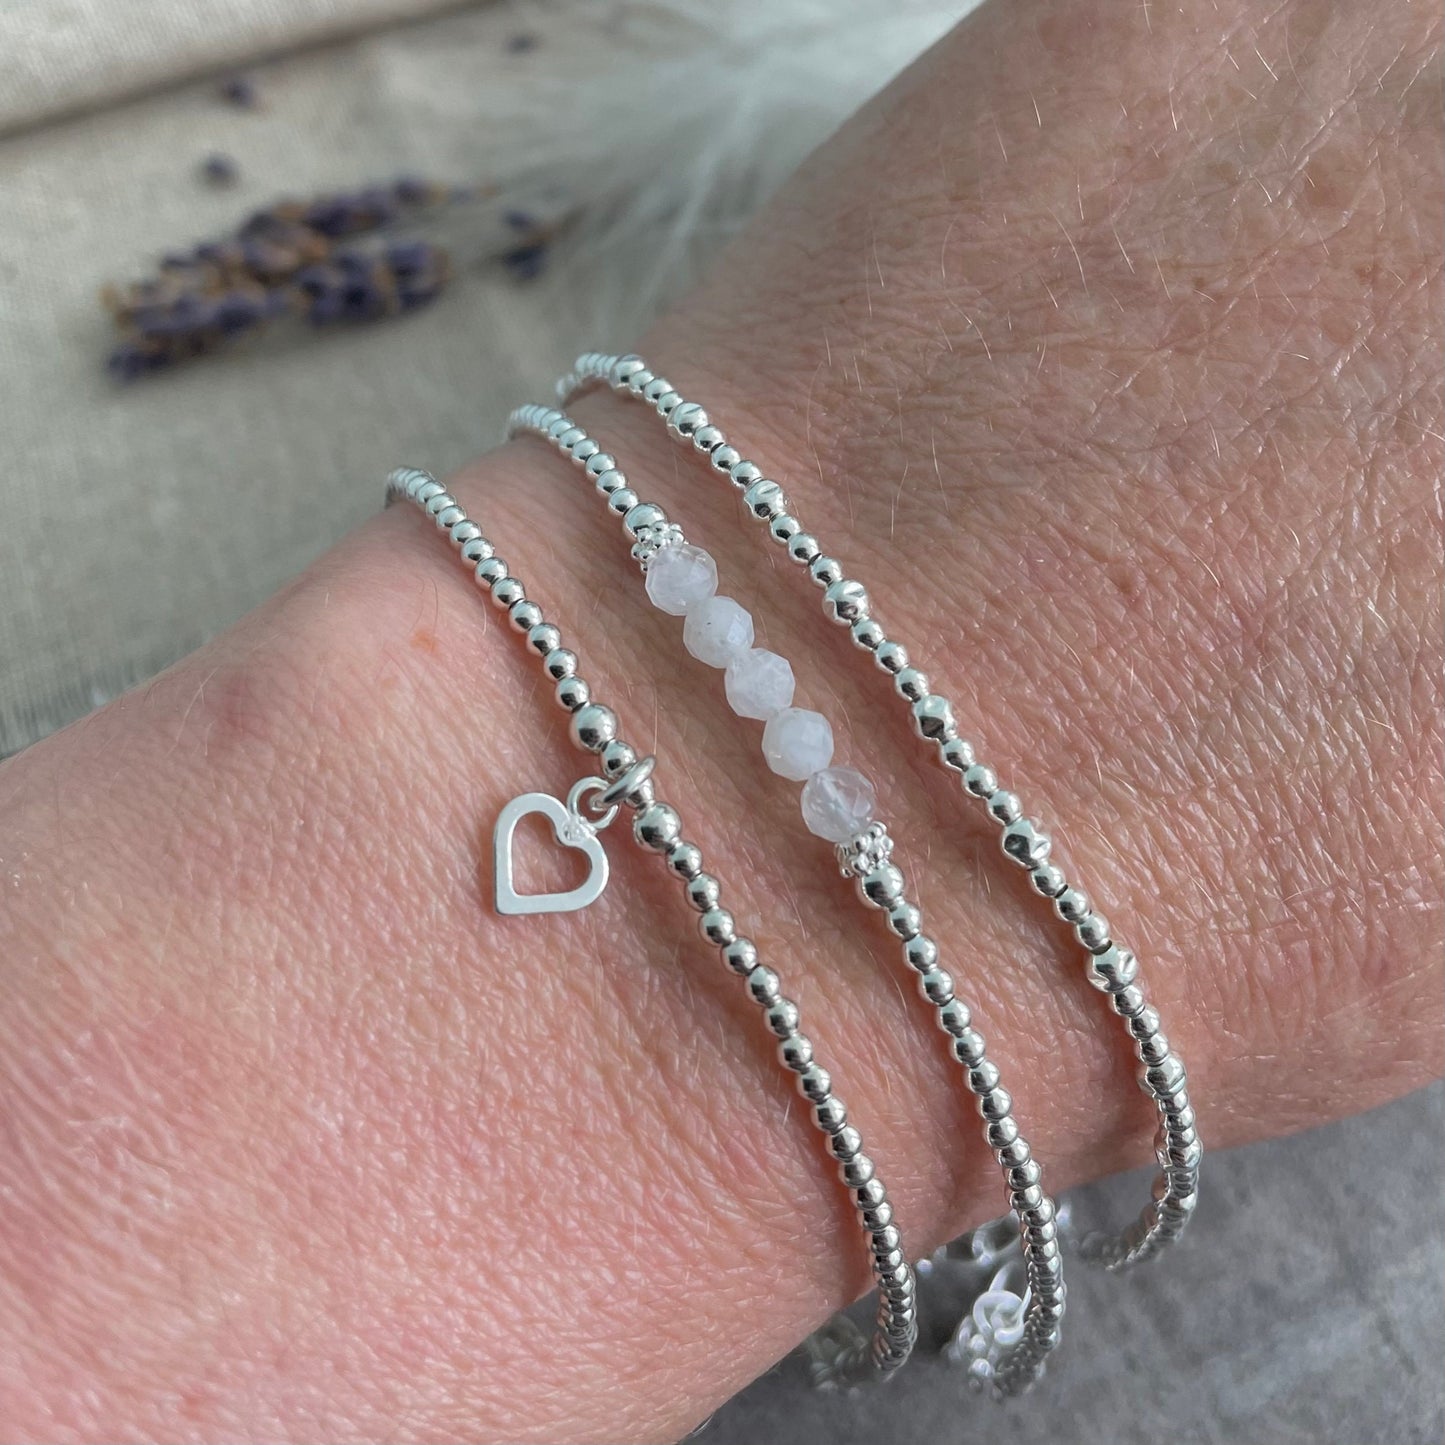 A Dainty June Birthstone Moonstone Bracelet Set, June Stacking Bracelets for Women in Sterling Silver